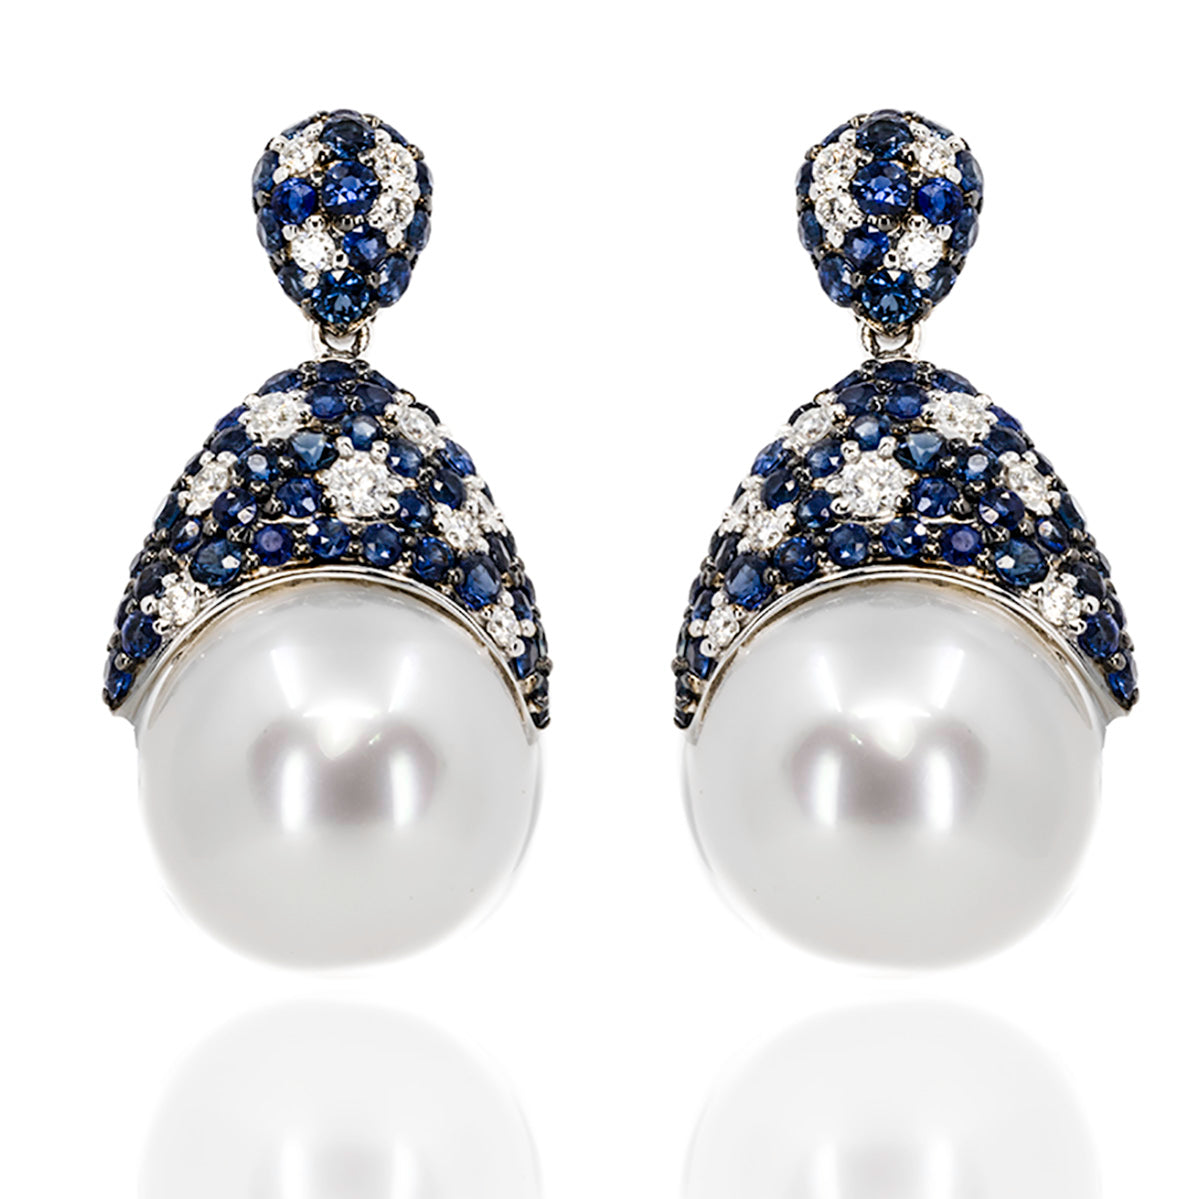 South Sea Pearl & Sapphire Earrings